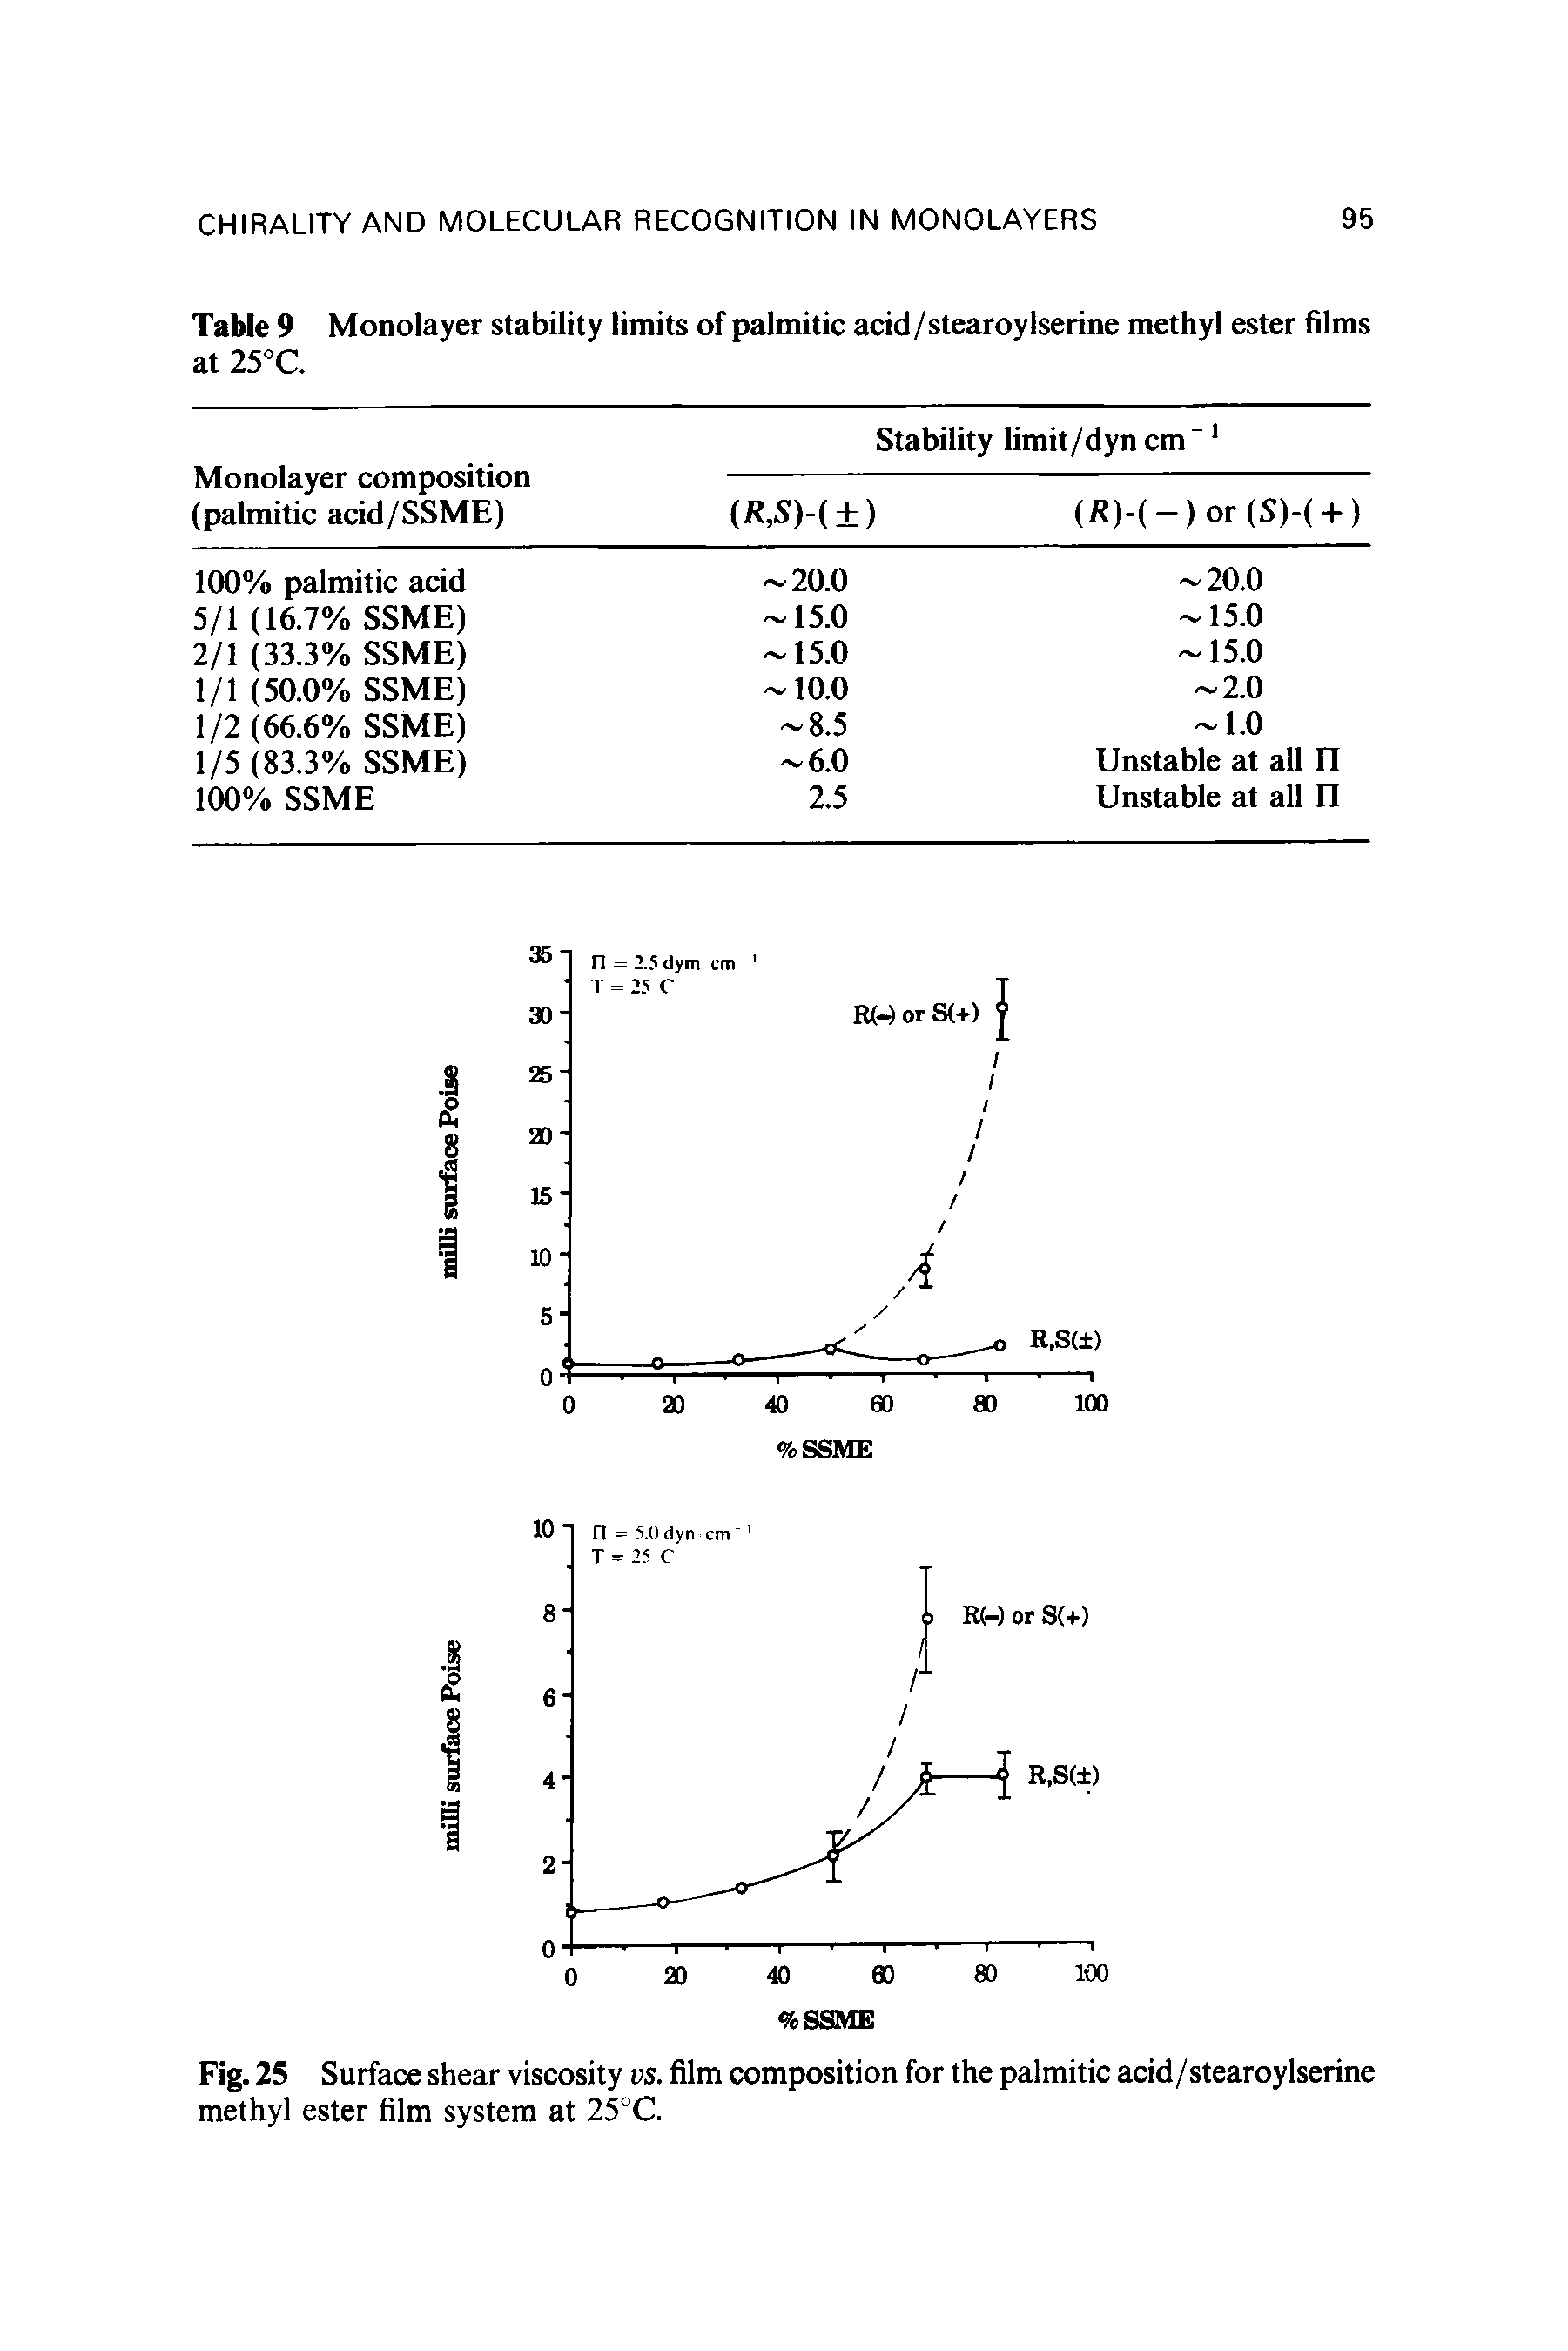 Table 9 Monolayer stability limits of palmitic acid/stearoylserine methyl ester films at 25°C.